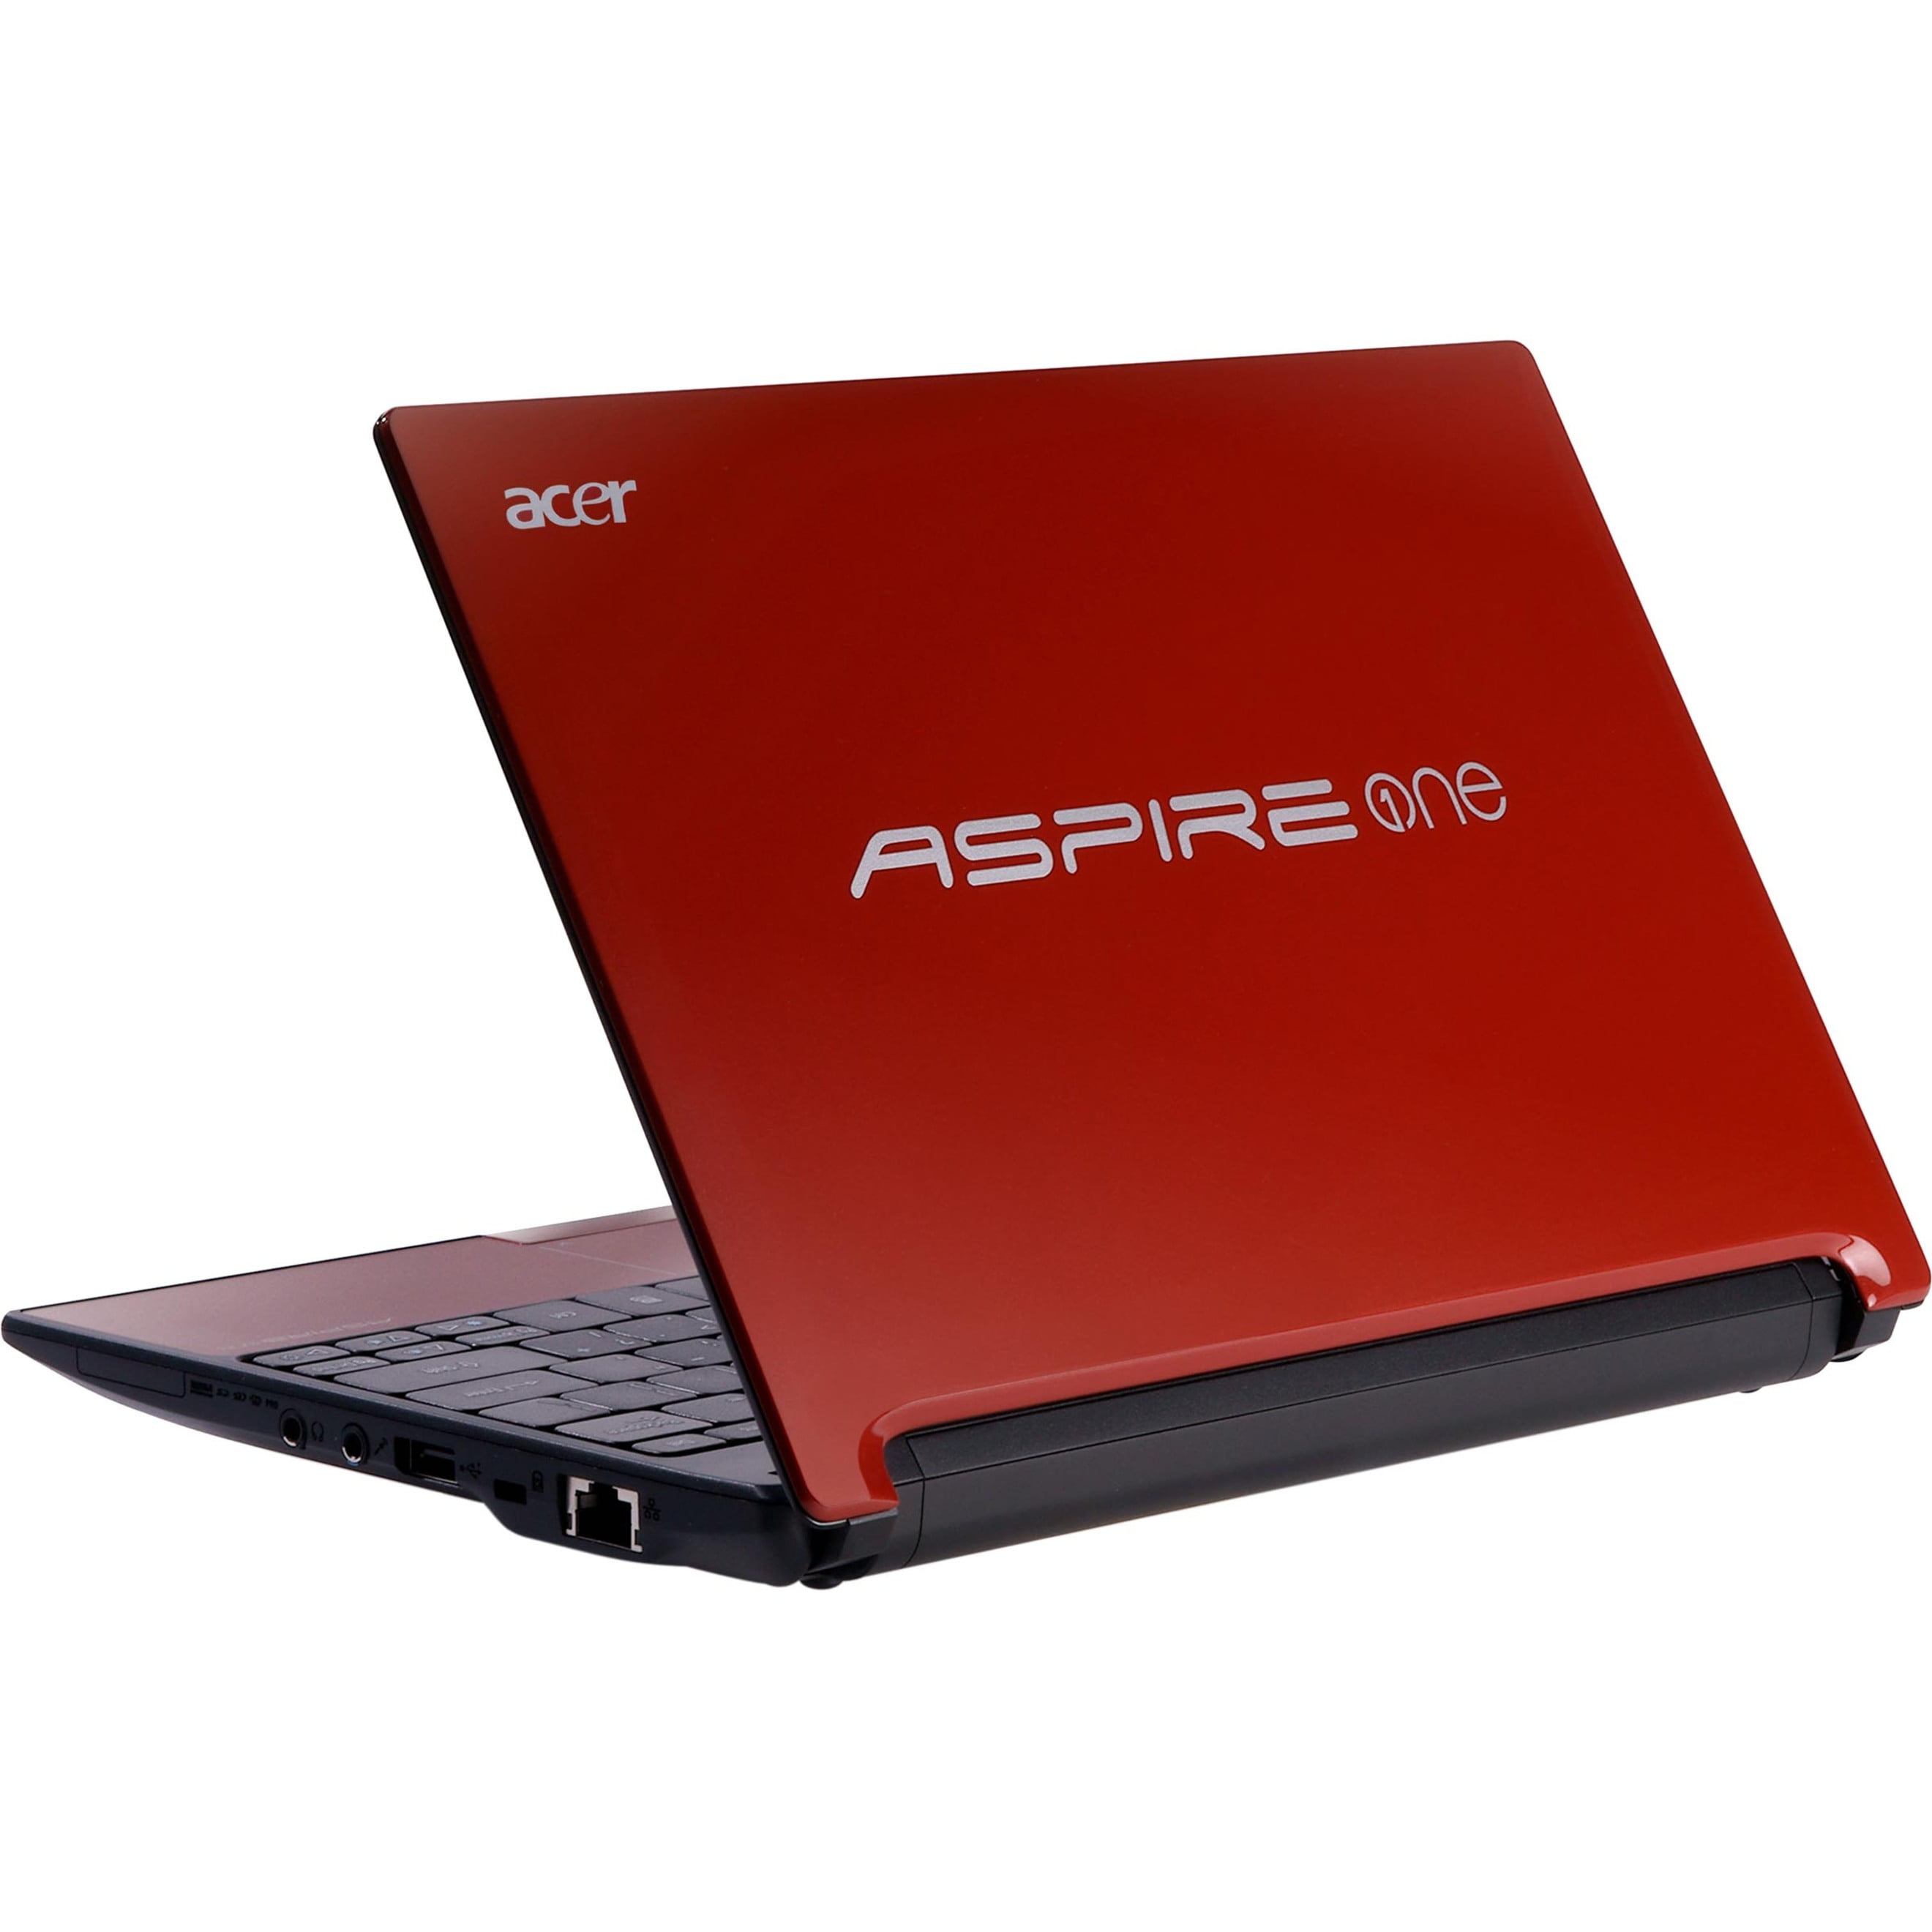 Aspire one купить. Acer Aspire one d255. Нетбук Acer Aspire one d270. Нетбук Acer Aspire one 255. Нетбук Acer Aspire one красный.